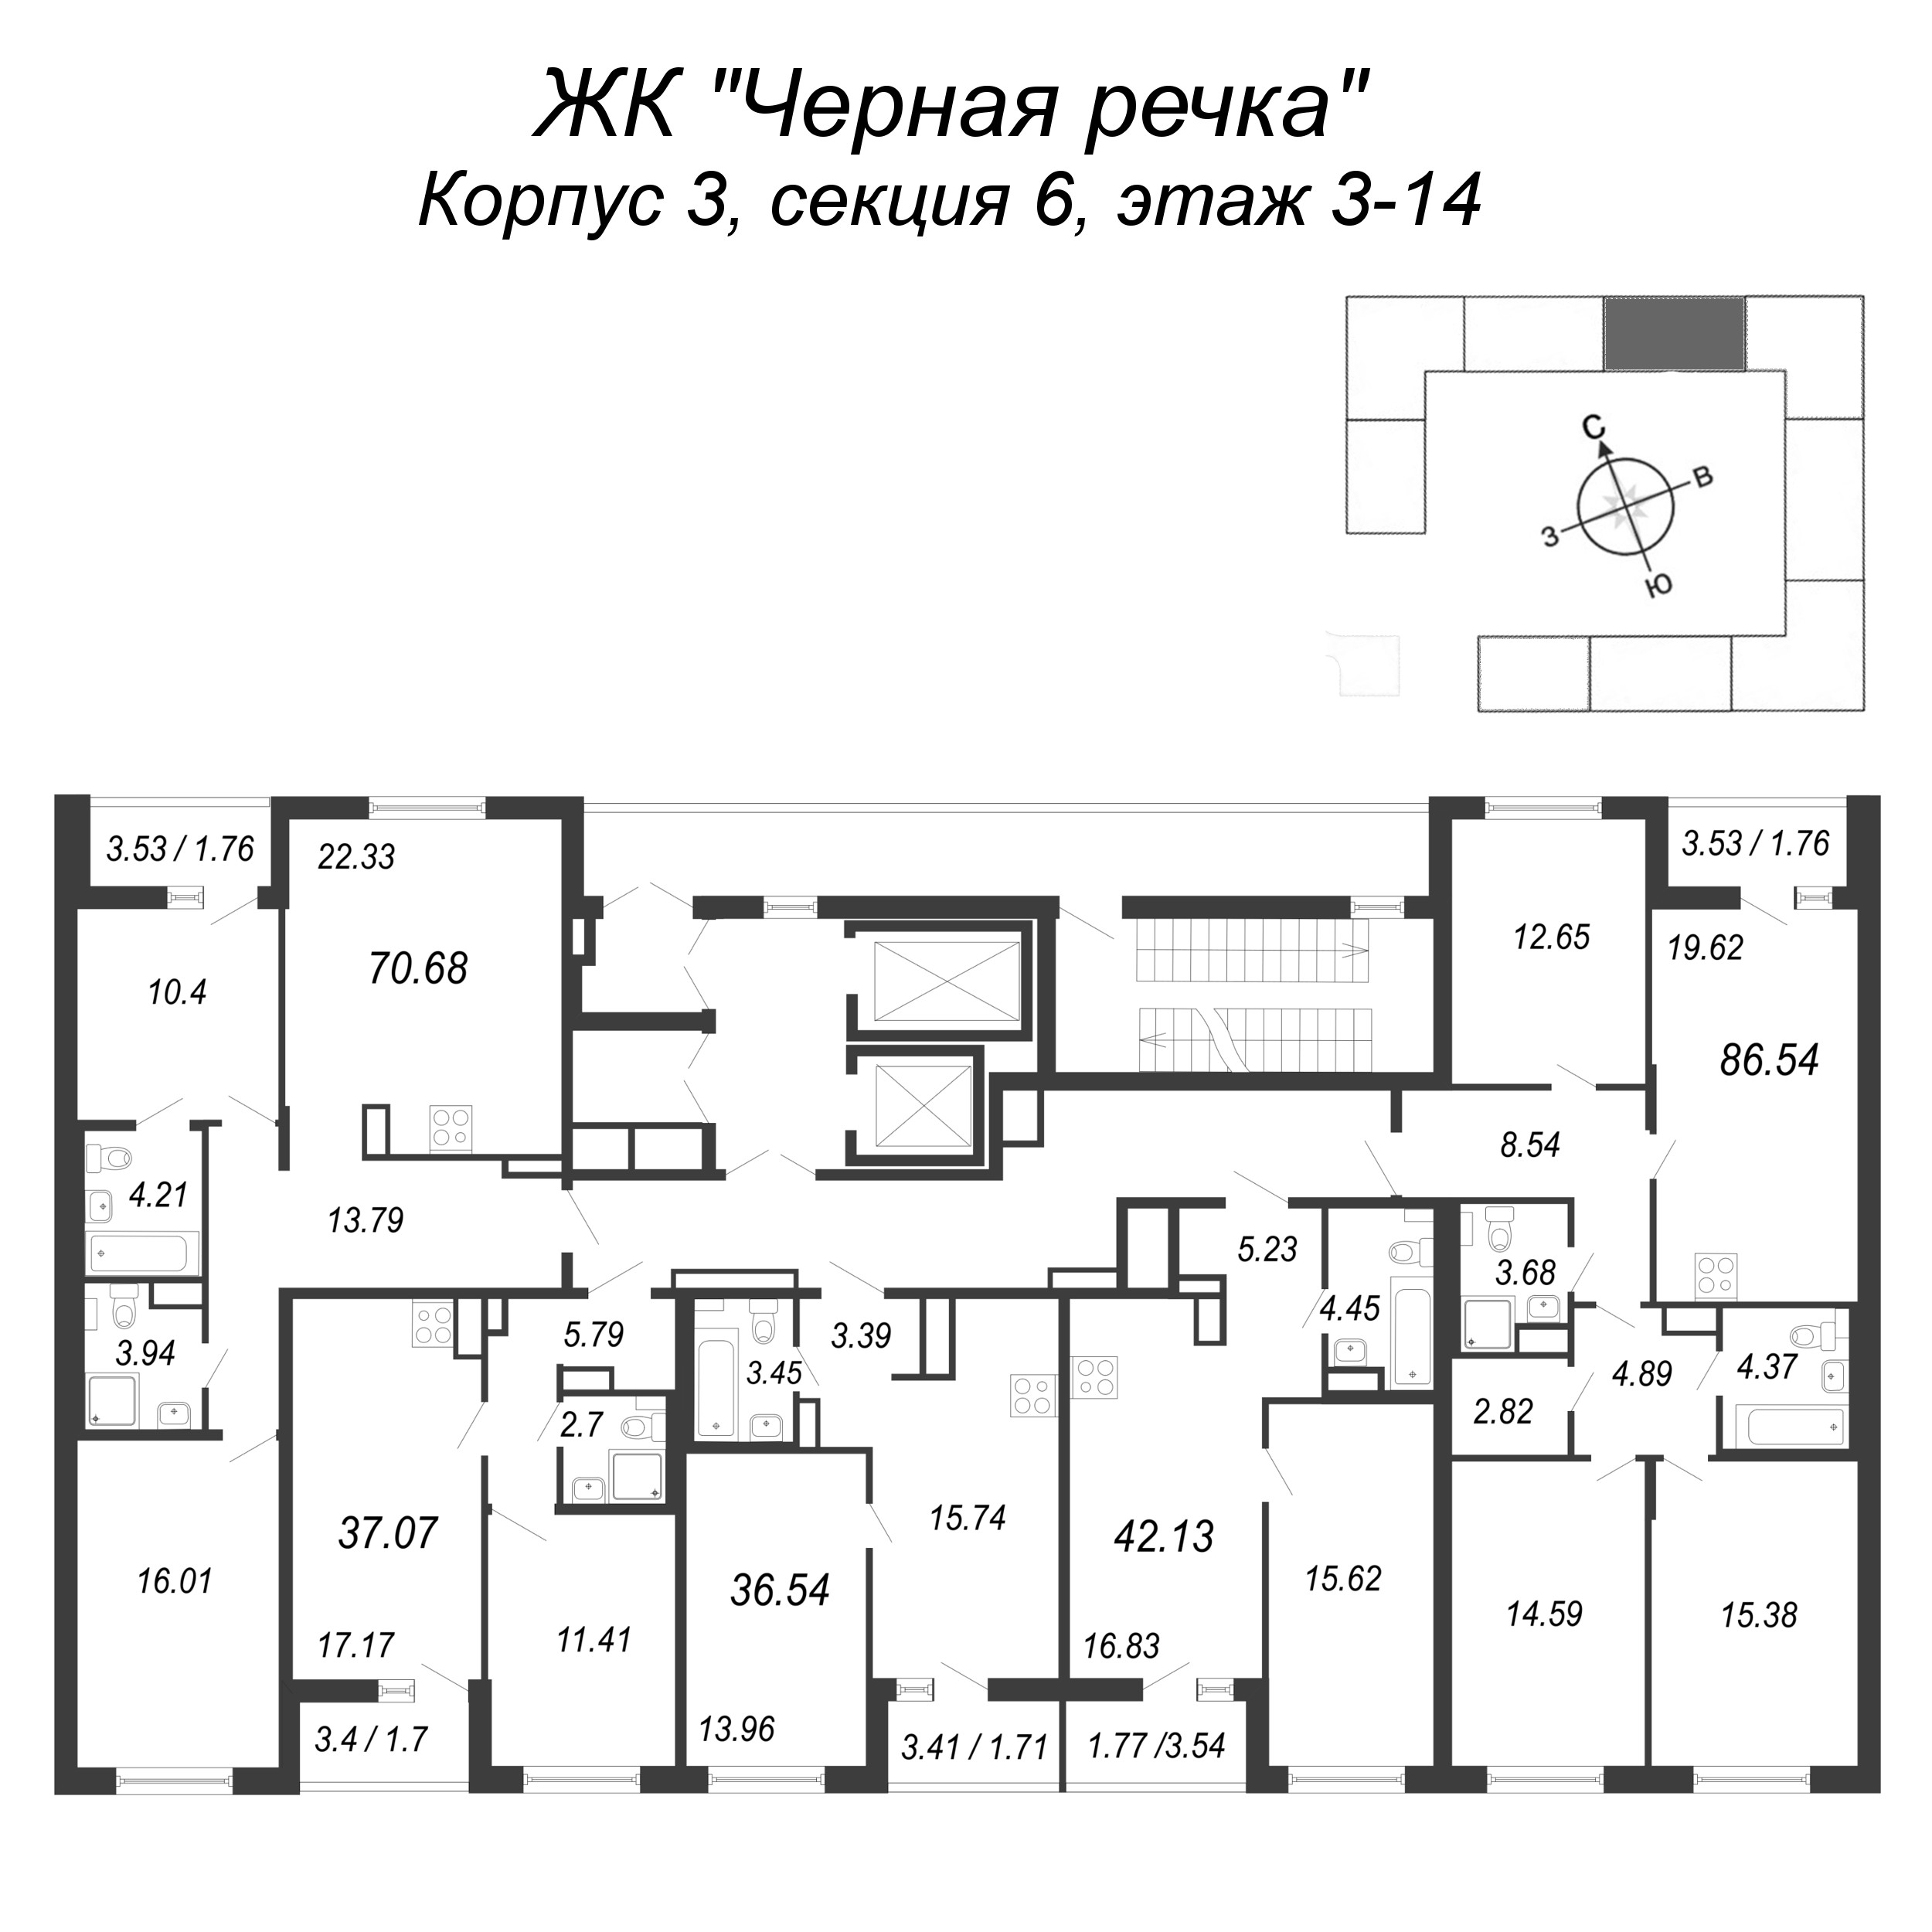 2-комнатная (Евро) квартира, 42.13 м² - планировка этажа